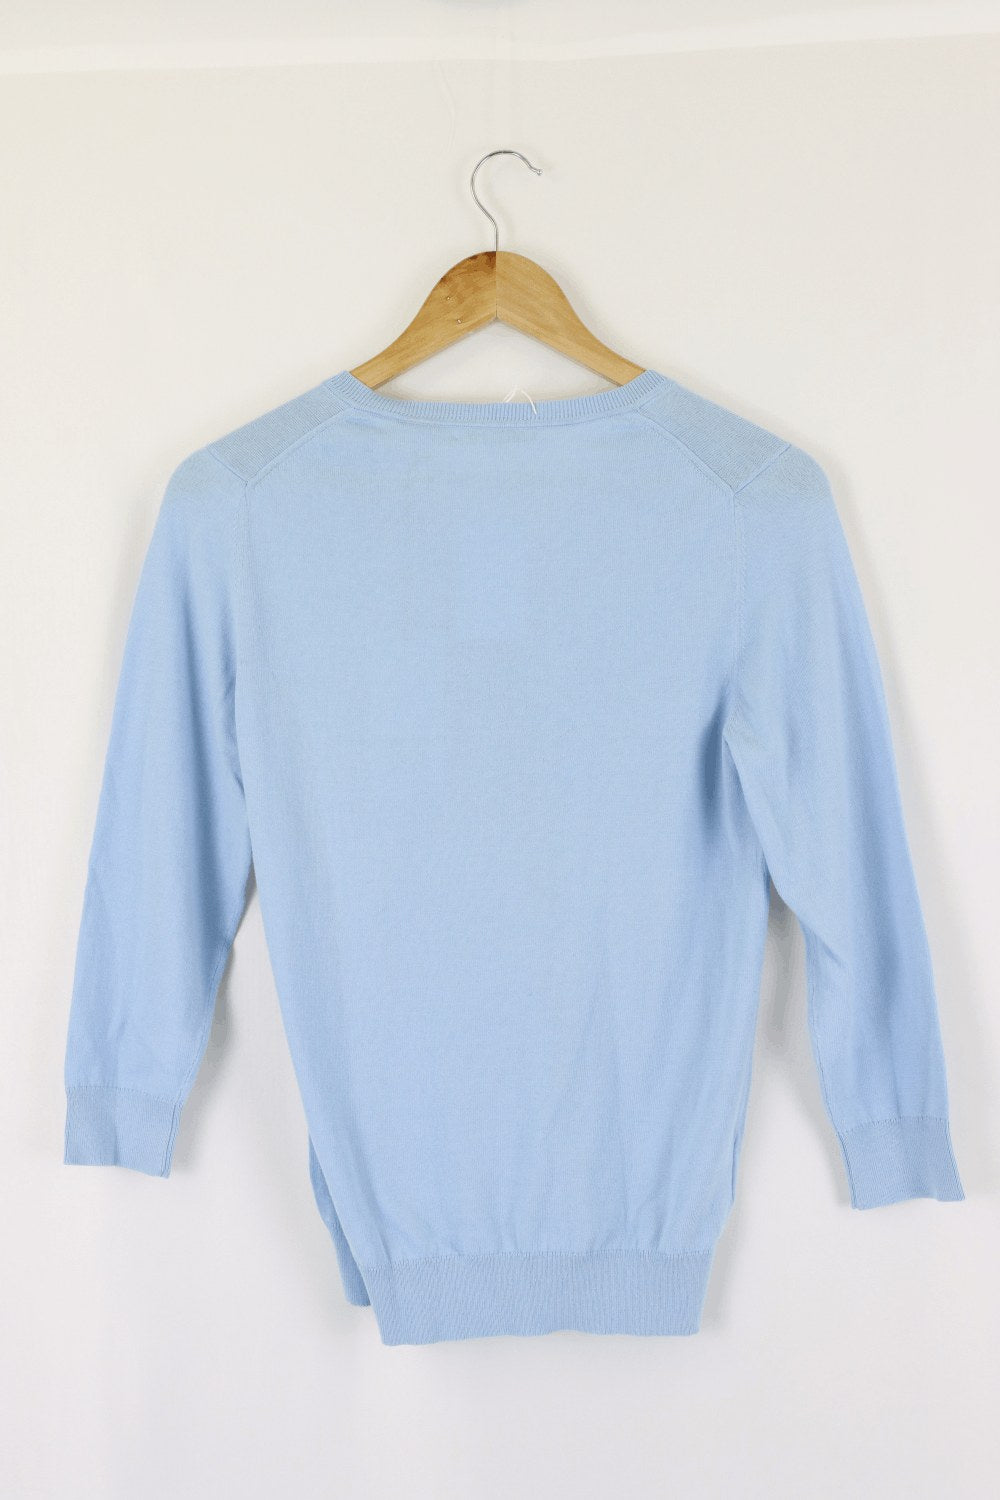 David Jones Blue Sweater XS